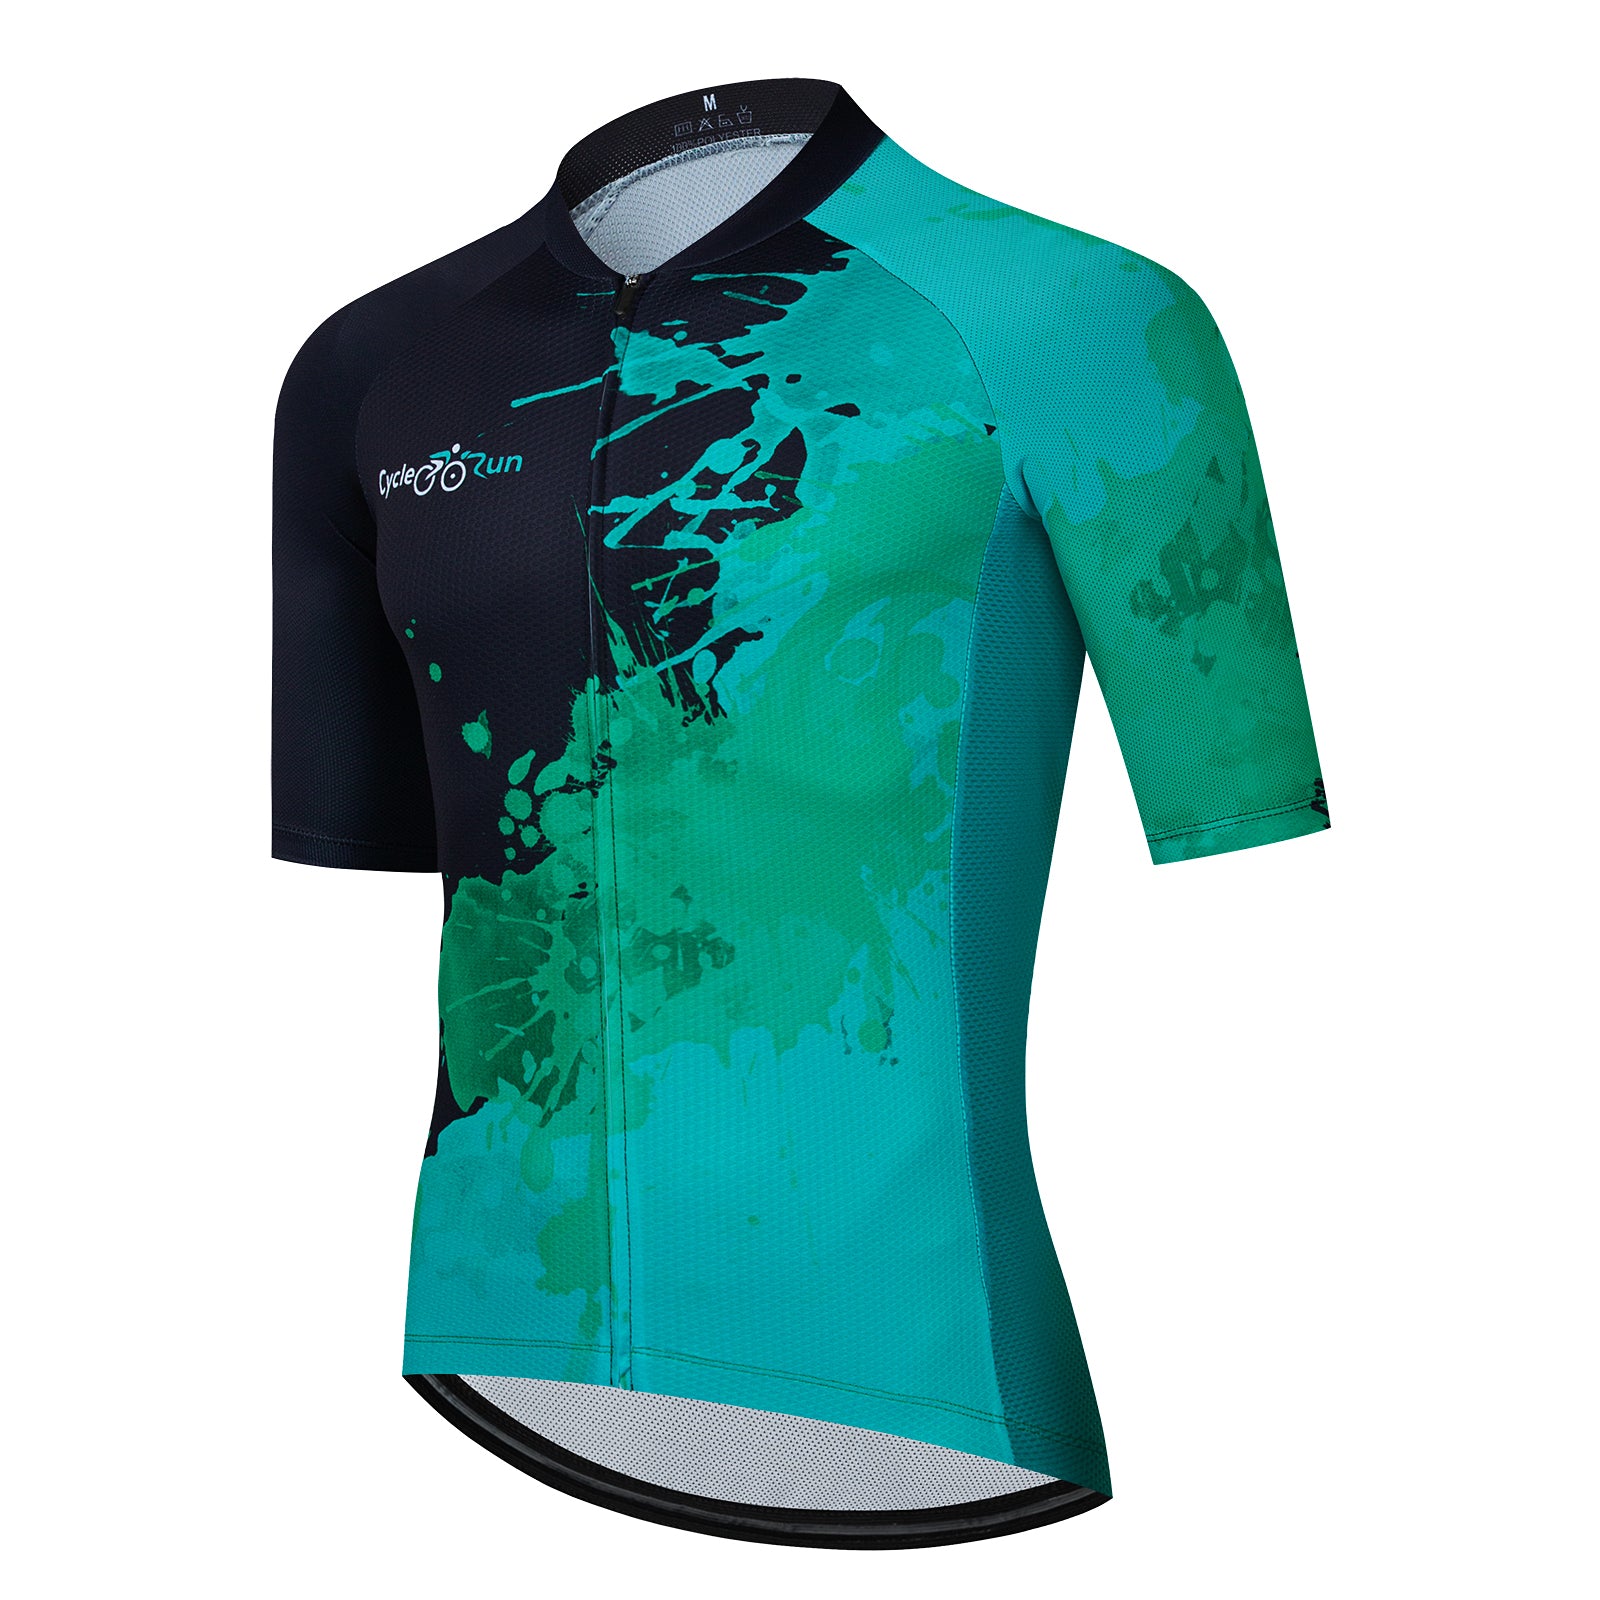 Black green paint splash cycling jersey